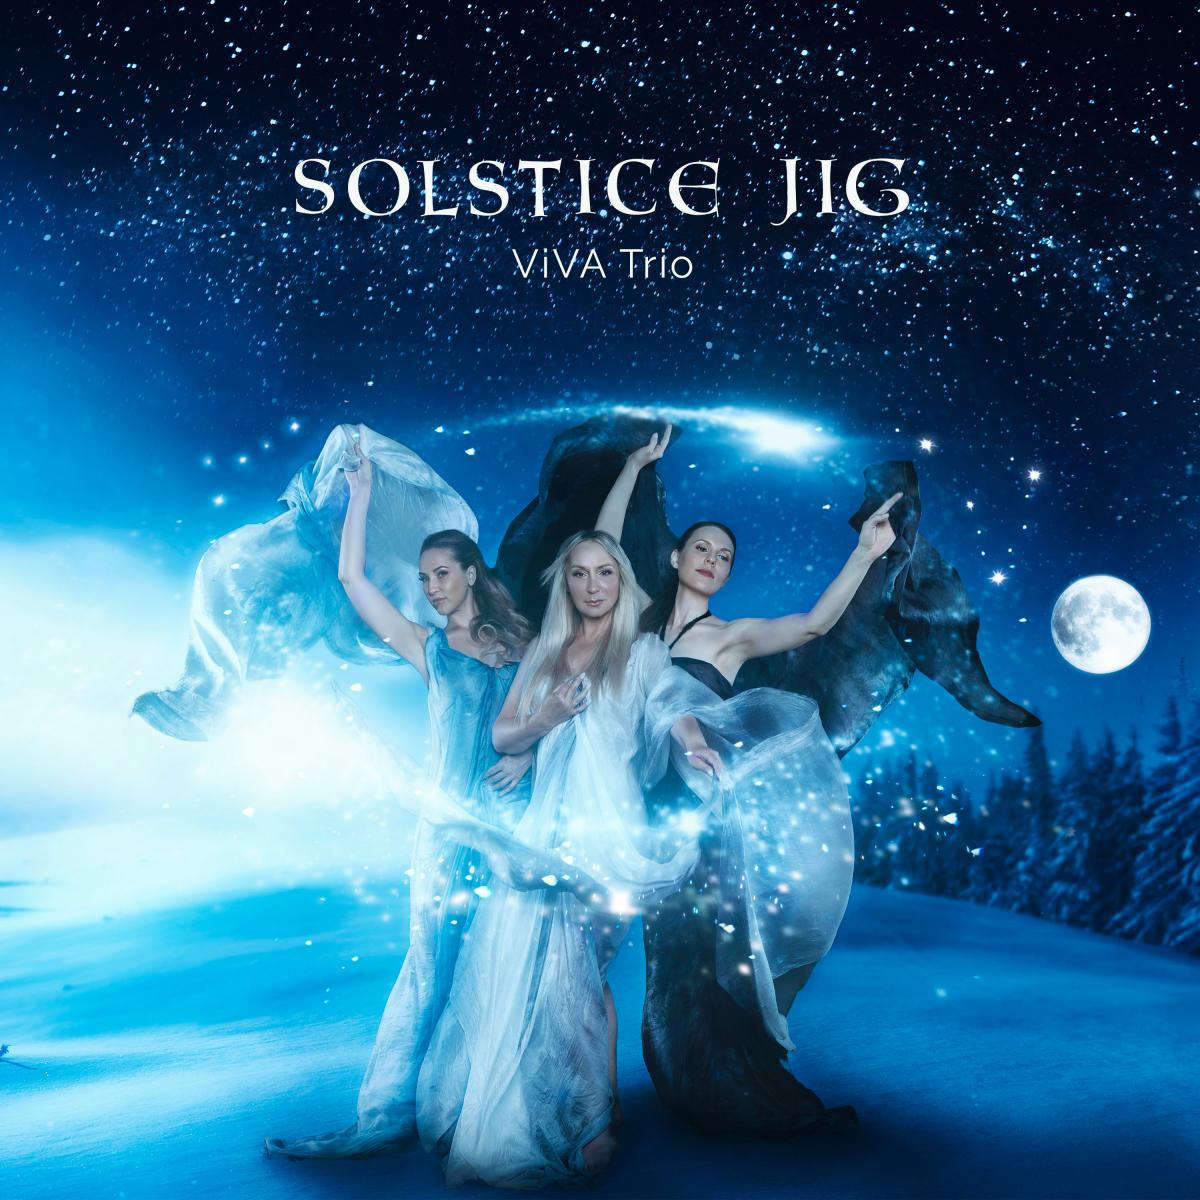 Solstice Jig ViVA Trio